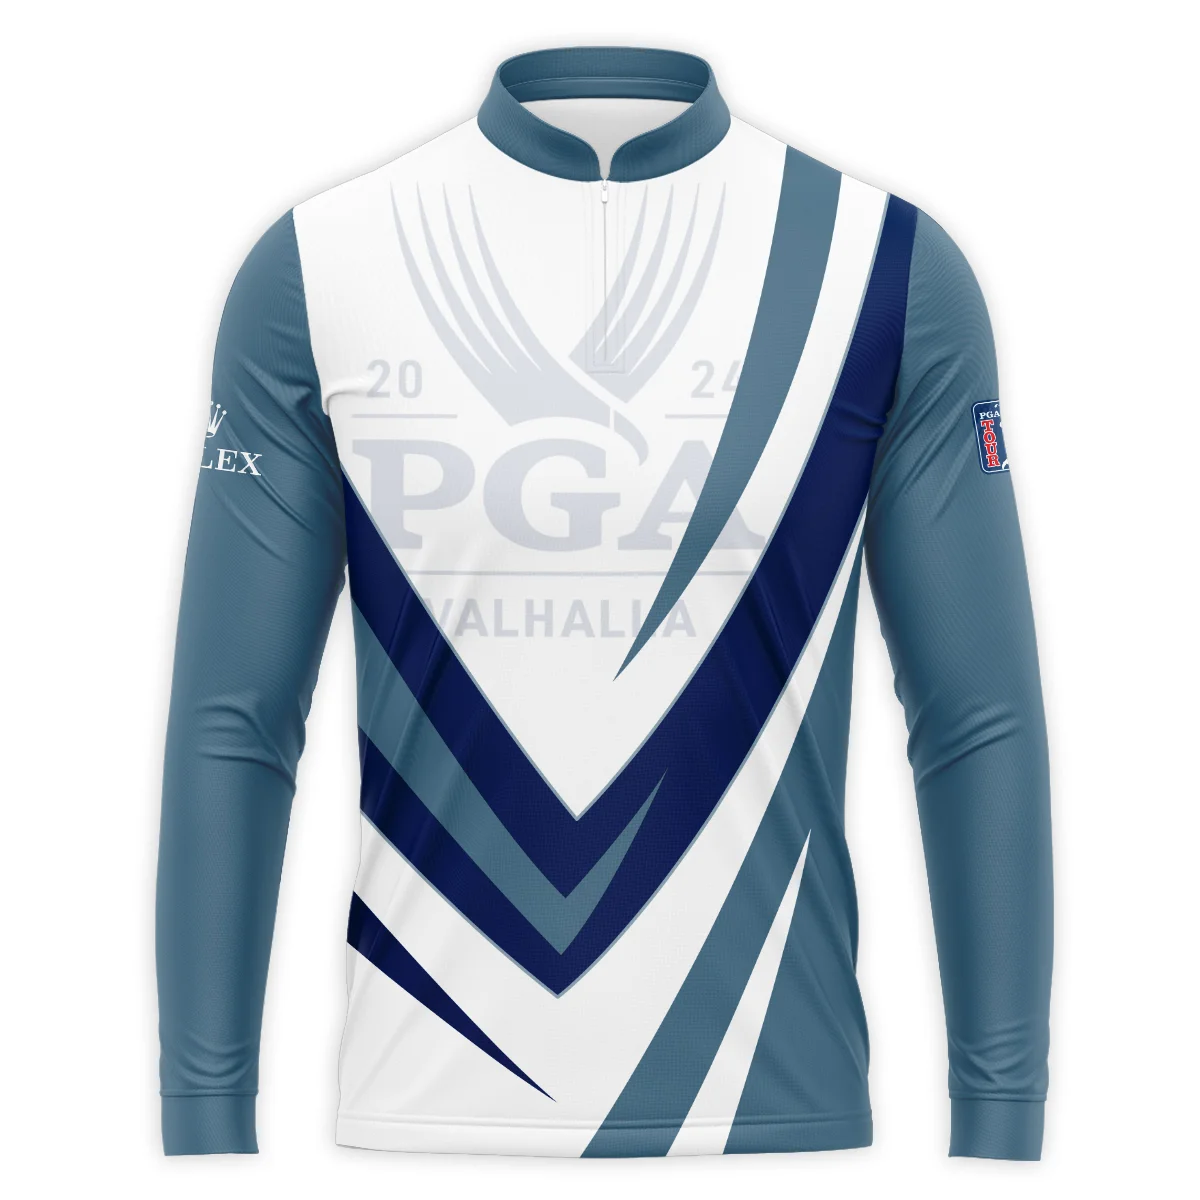 Rolex 2024 PGA Championship Valhalla Dark Moderate Blue White Blue Quarter-Zip Jacket Style Classic Quarter-Zip Jacket